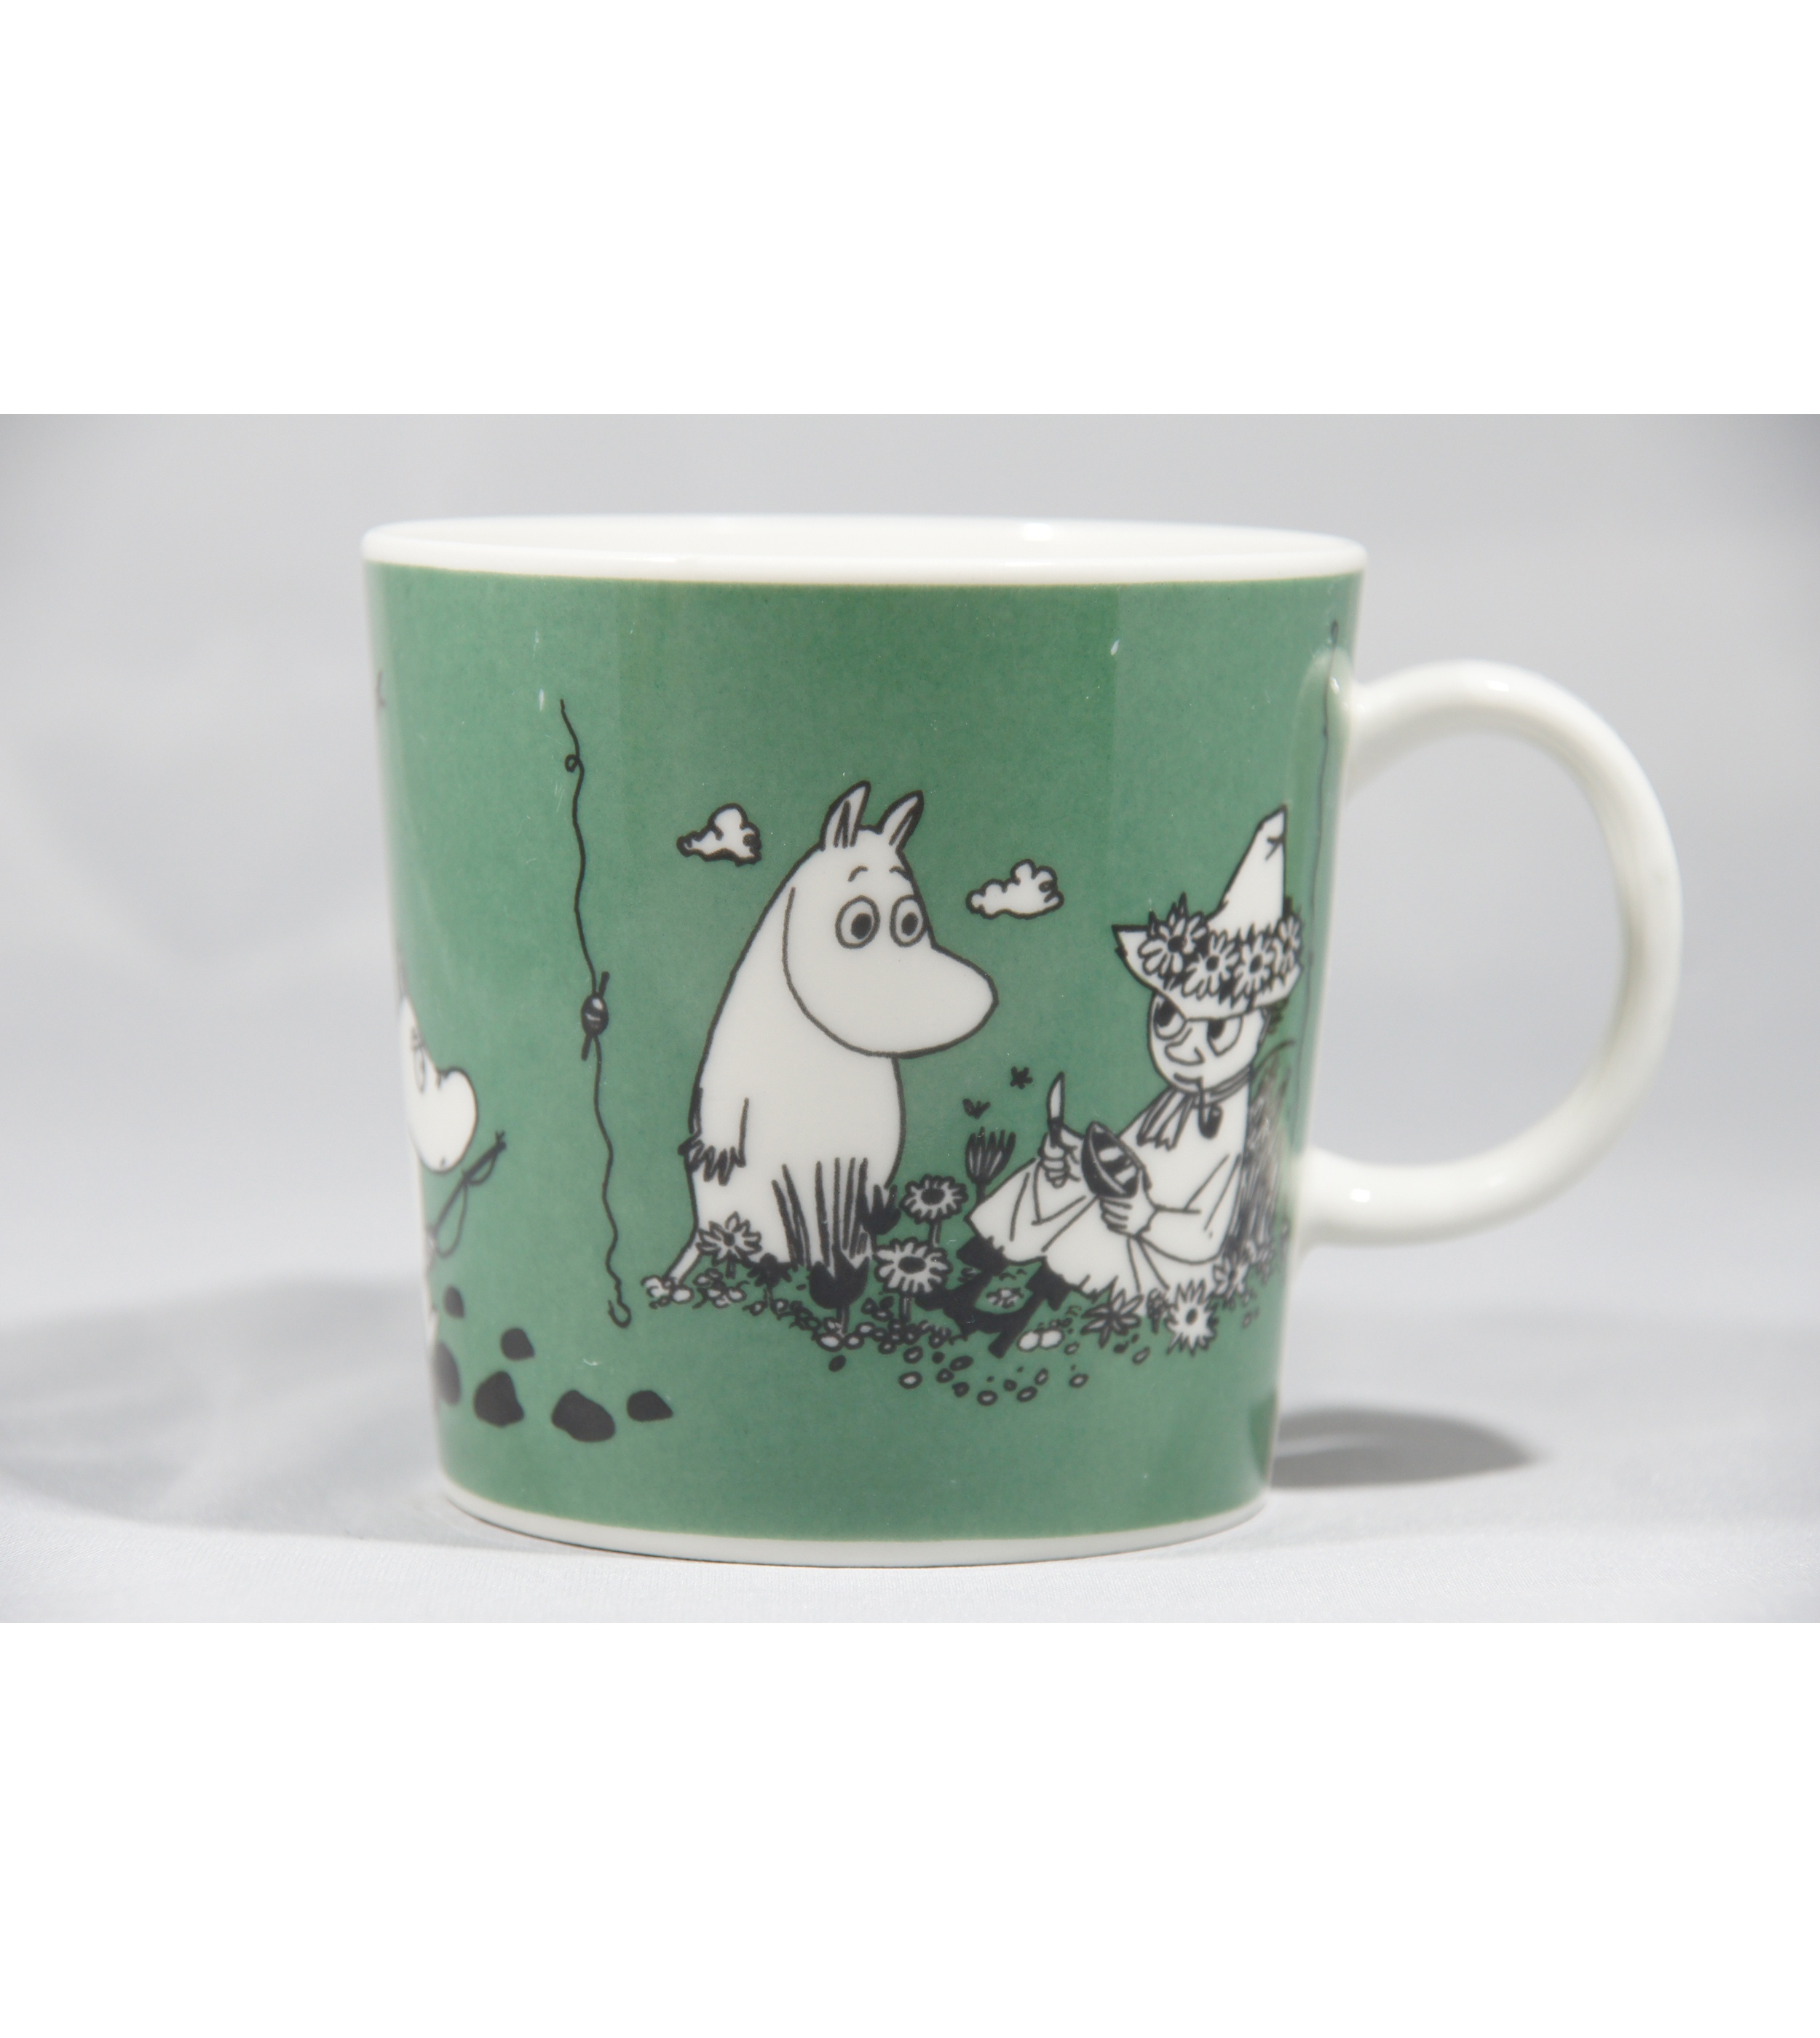 Moomin mug, Moomin prices, Moominvalley